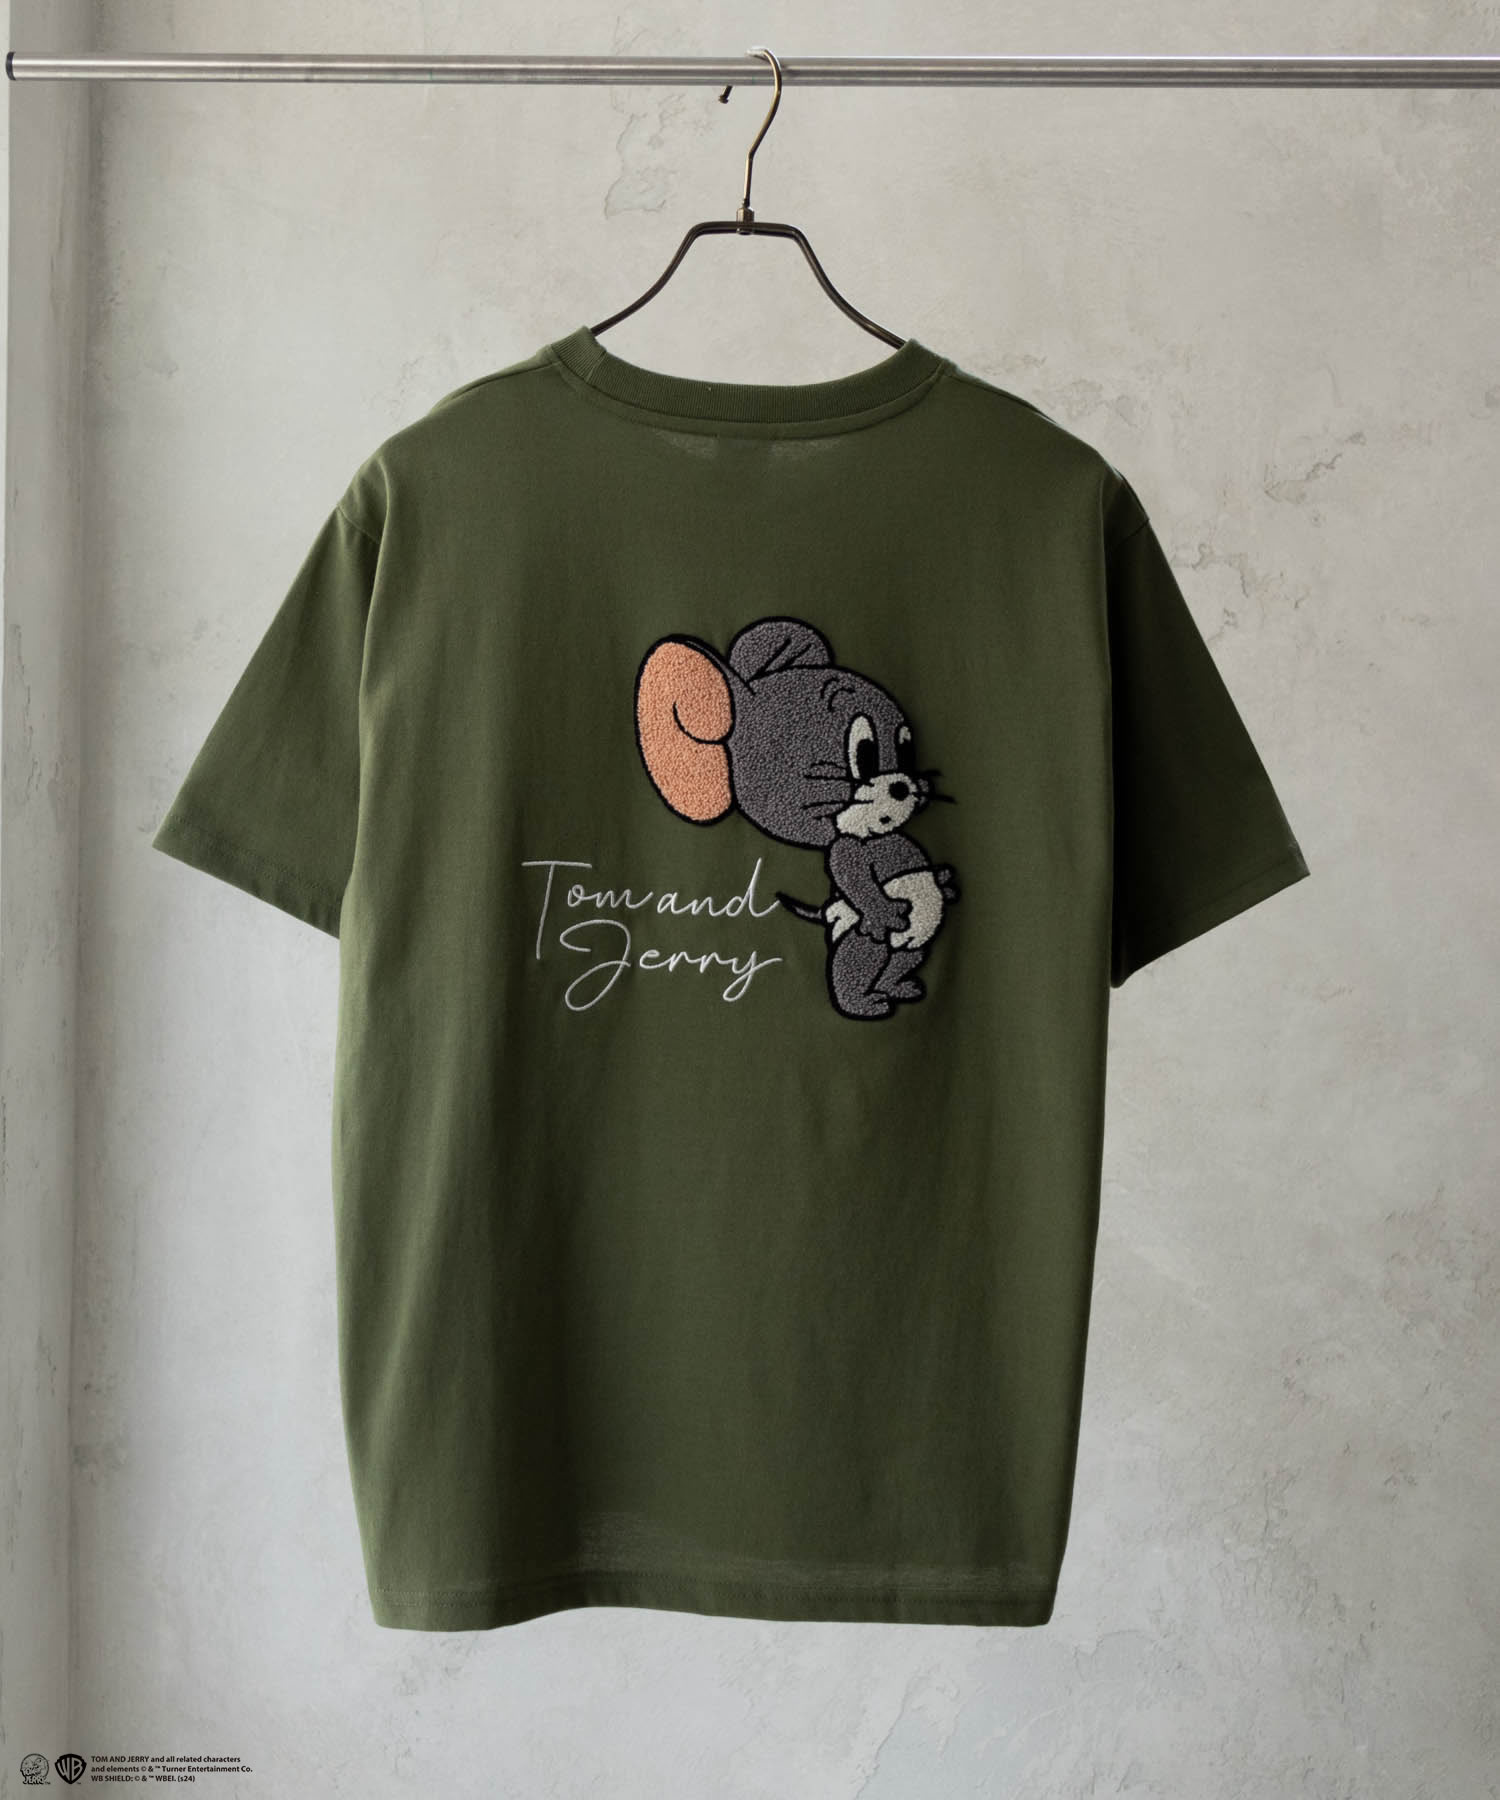 Tom and Jerry トムとジェリー 半袖Tシャツ ゆったり サガラ刺繍 キャラクター クルー...